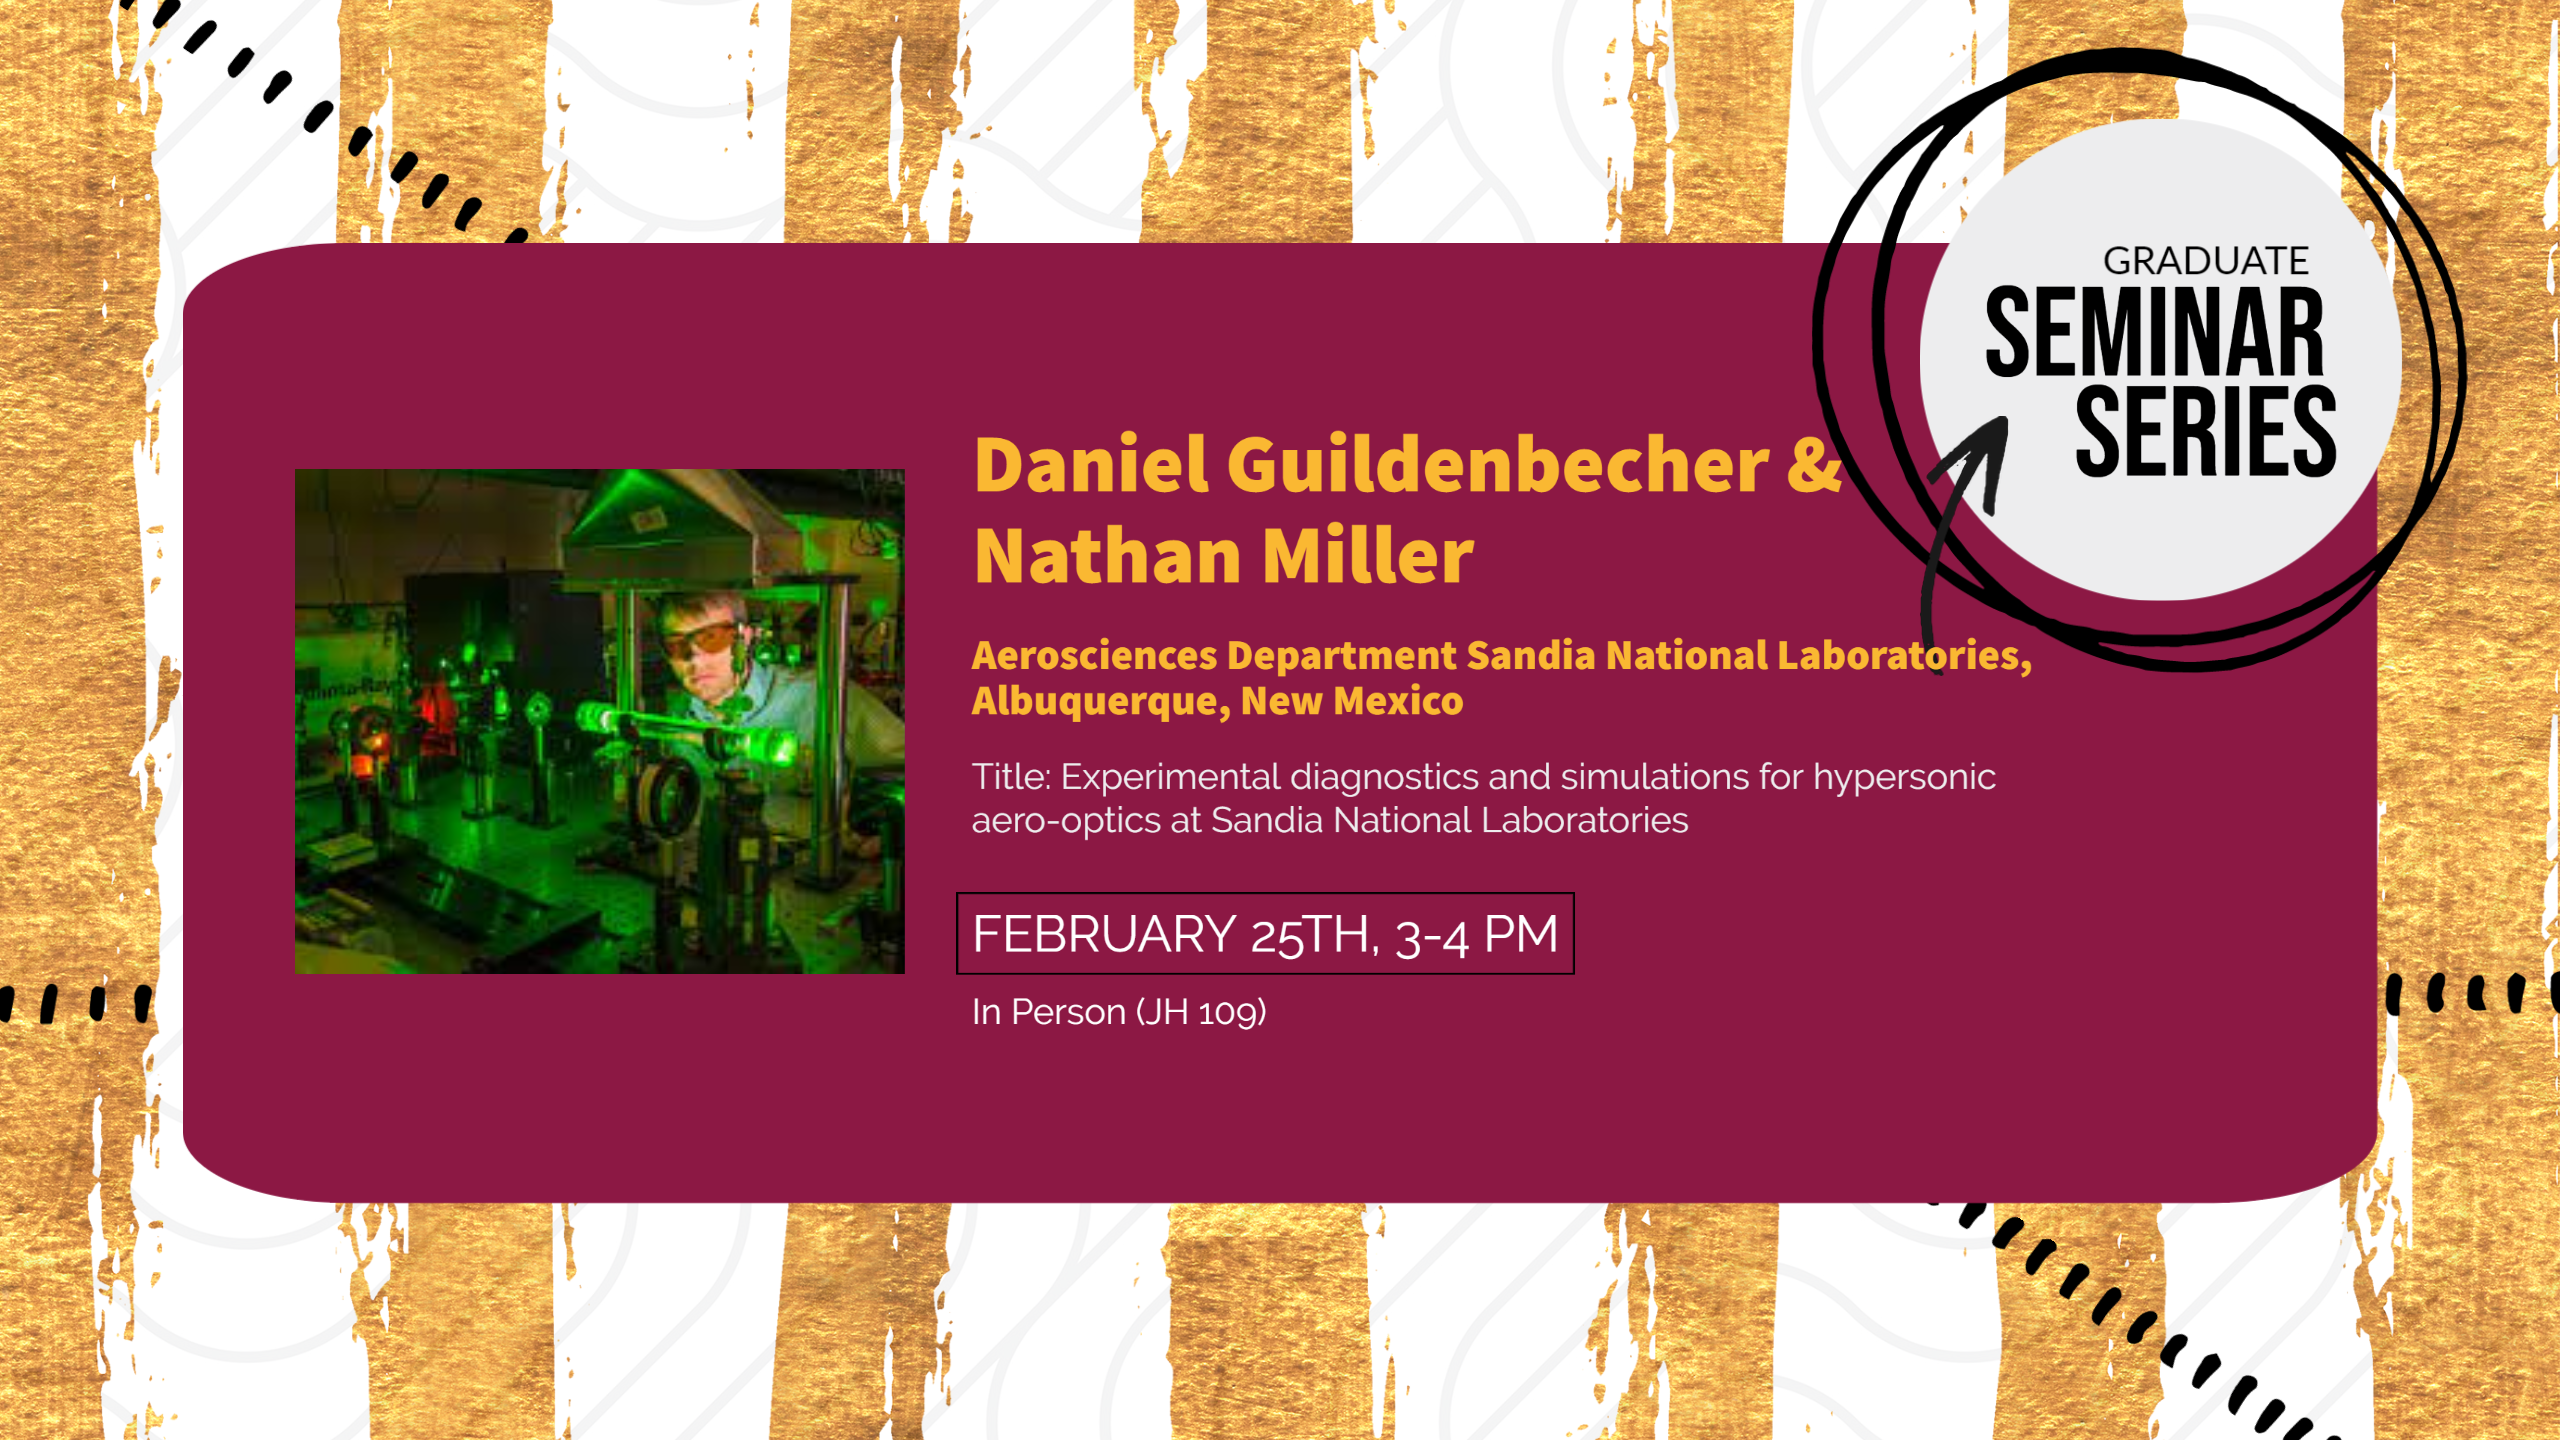 Announcement of Graduate Seminar by Dr. Daniel Guildenbecher and Nathan Miller